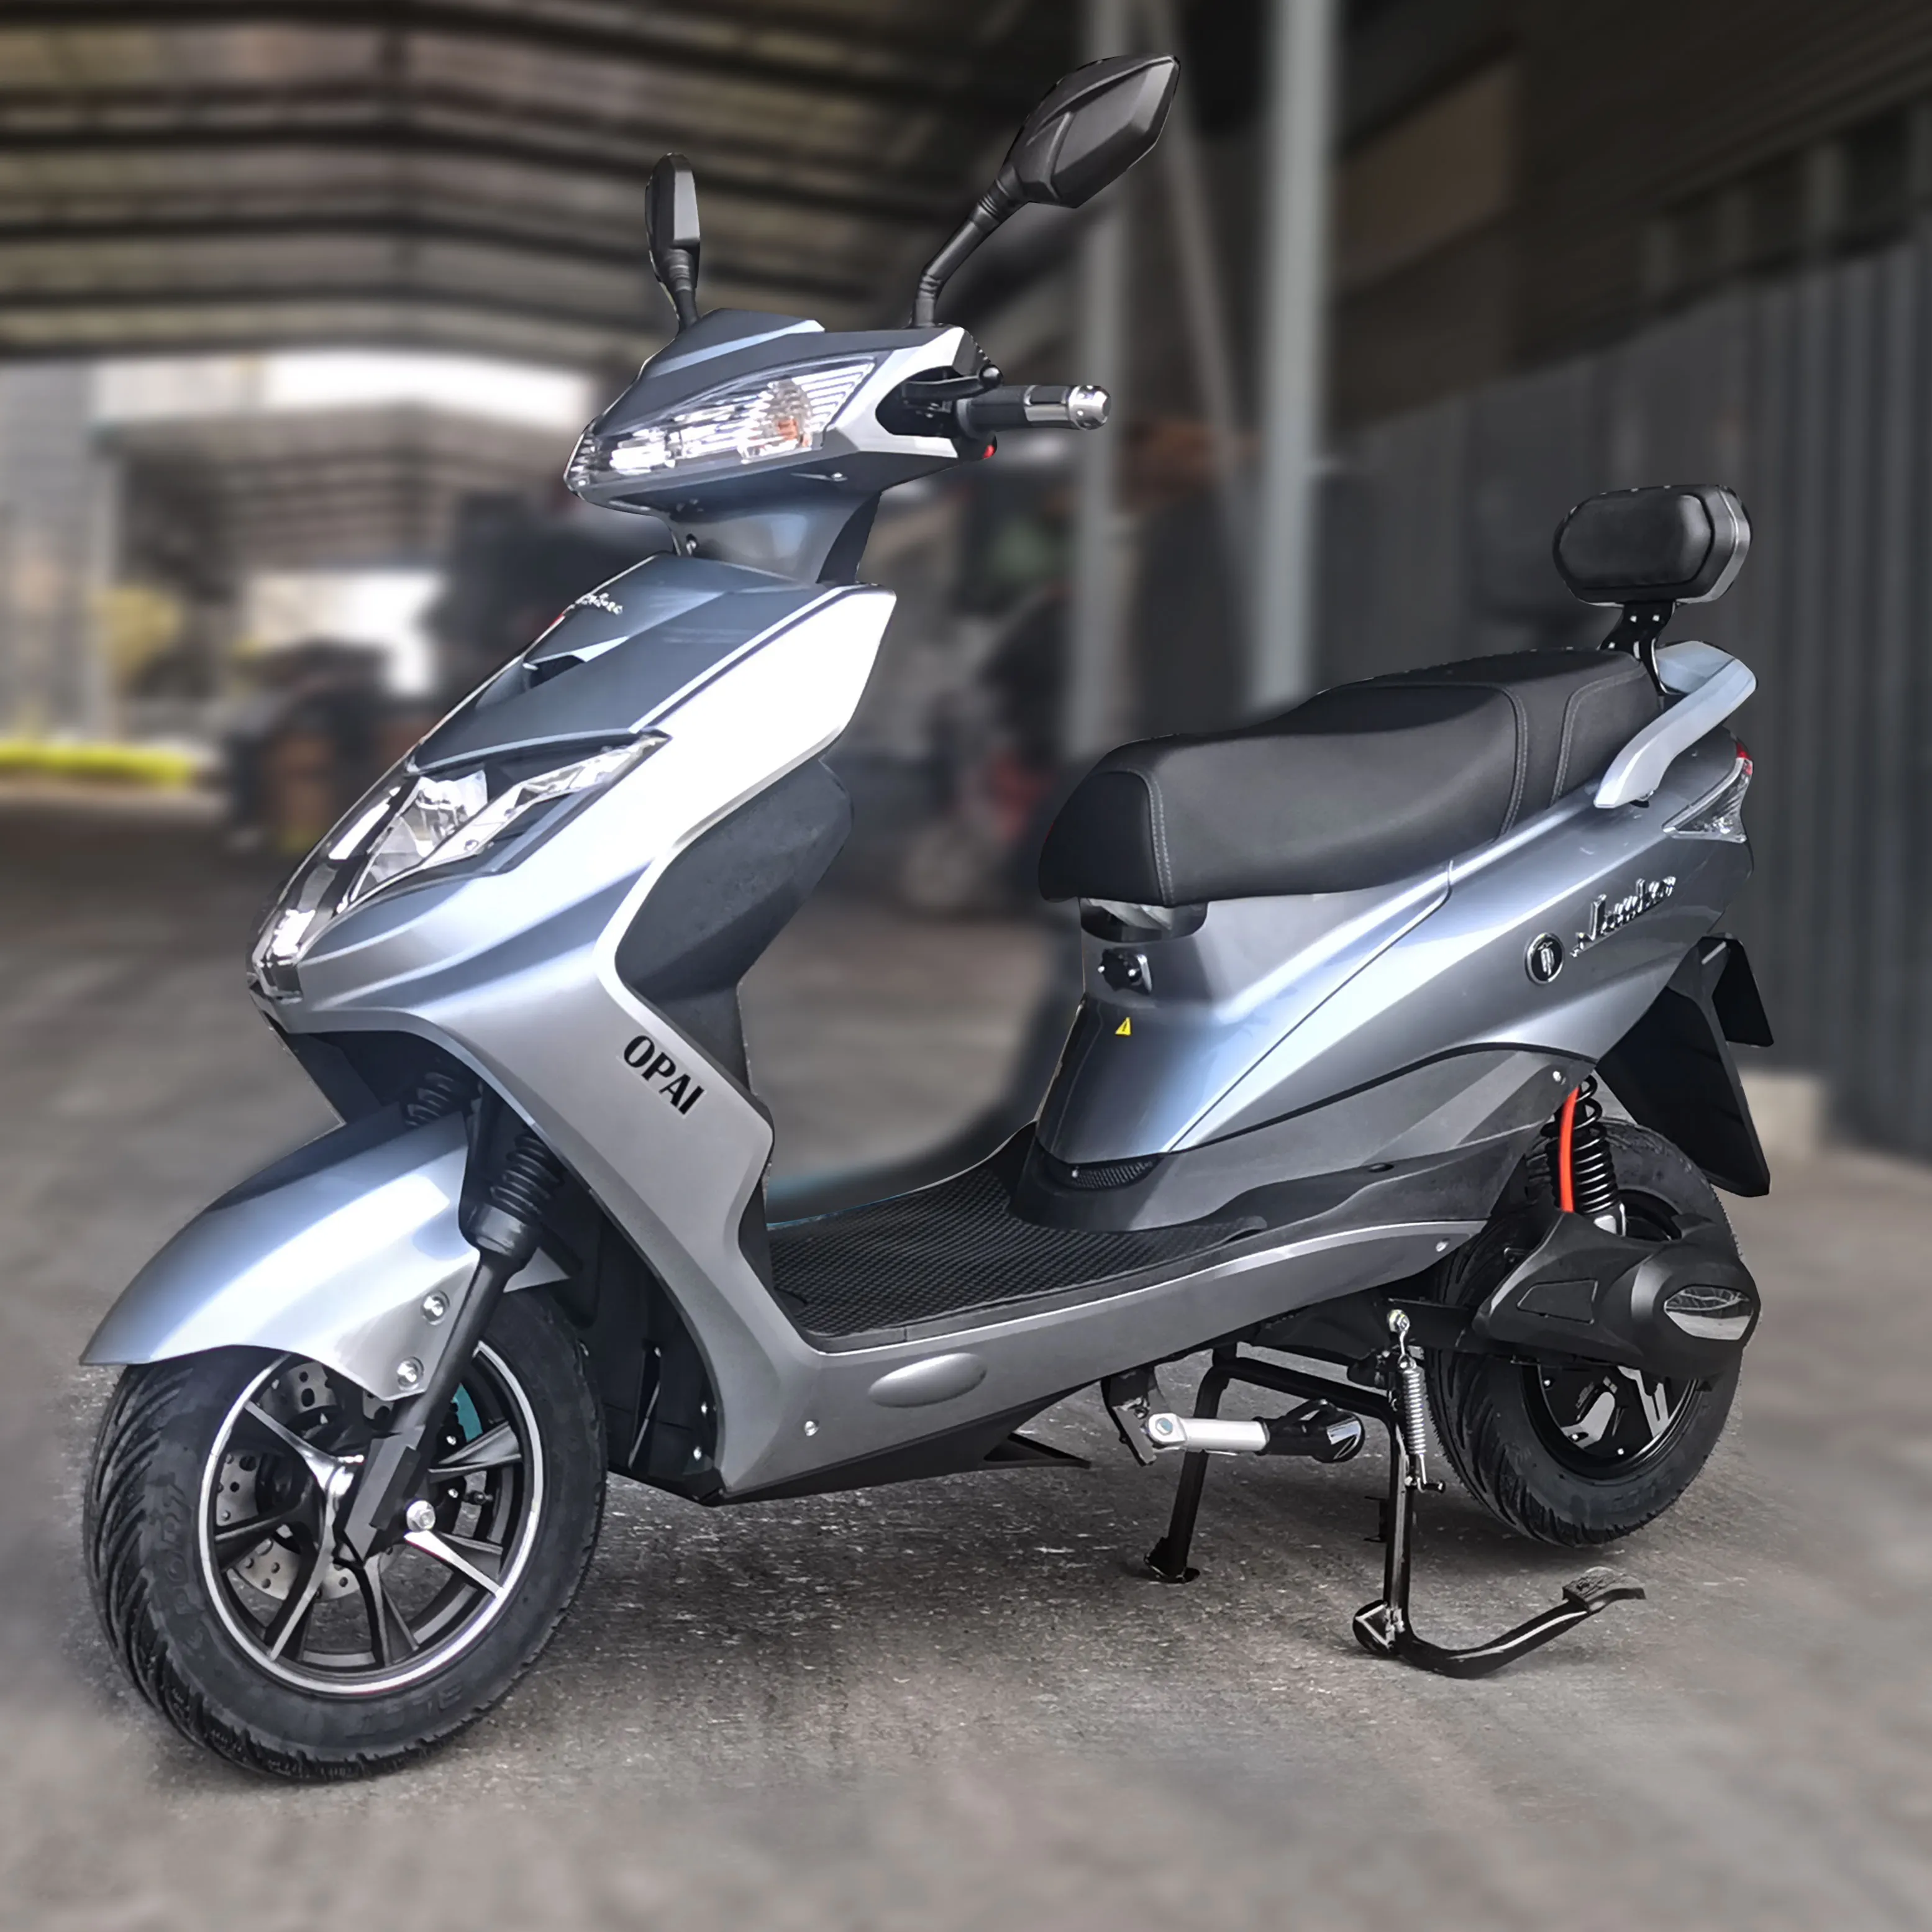 OPAIスクーター1000w2000welektrikli motorsiklet motos eletricas 120km/hオフロードバイク